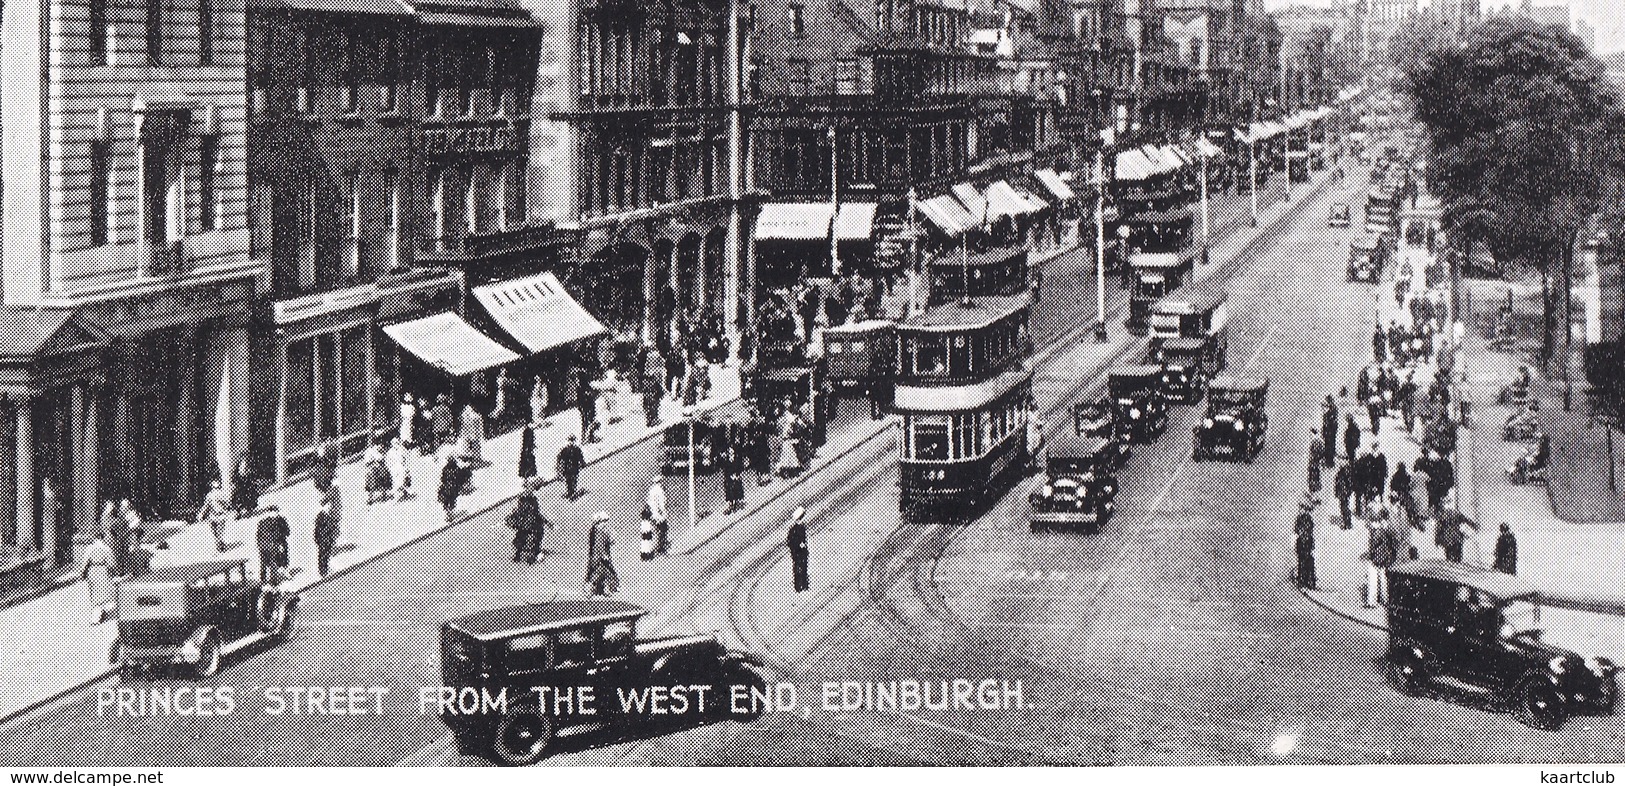 Edinburgh: 2x DOUBLE DECK STREETCAR / TRAM, OLDTIMER CARS 1930's - Princes Street From The West End - Scotland - Toerisme